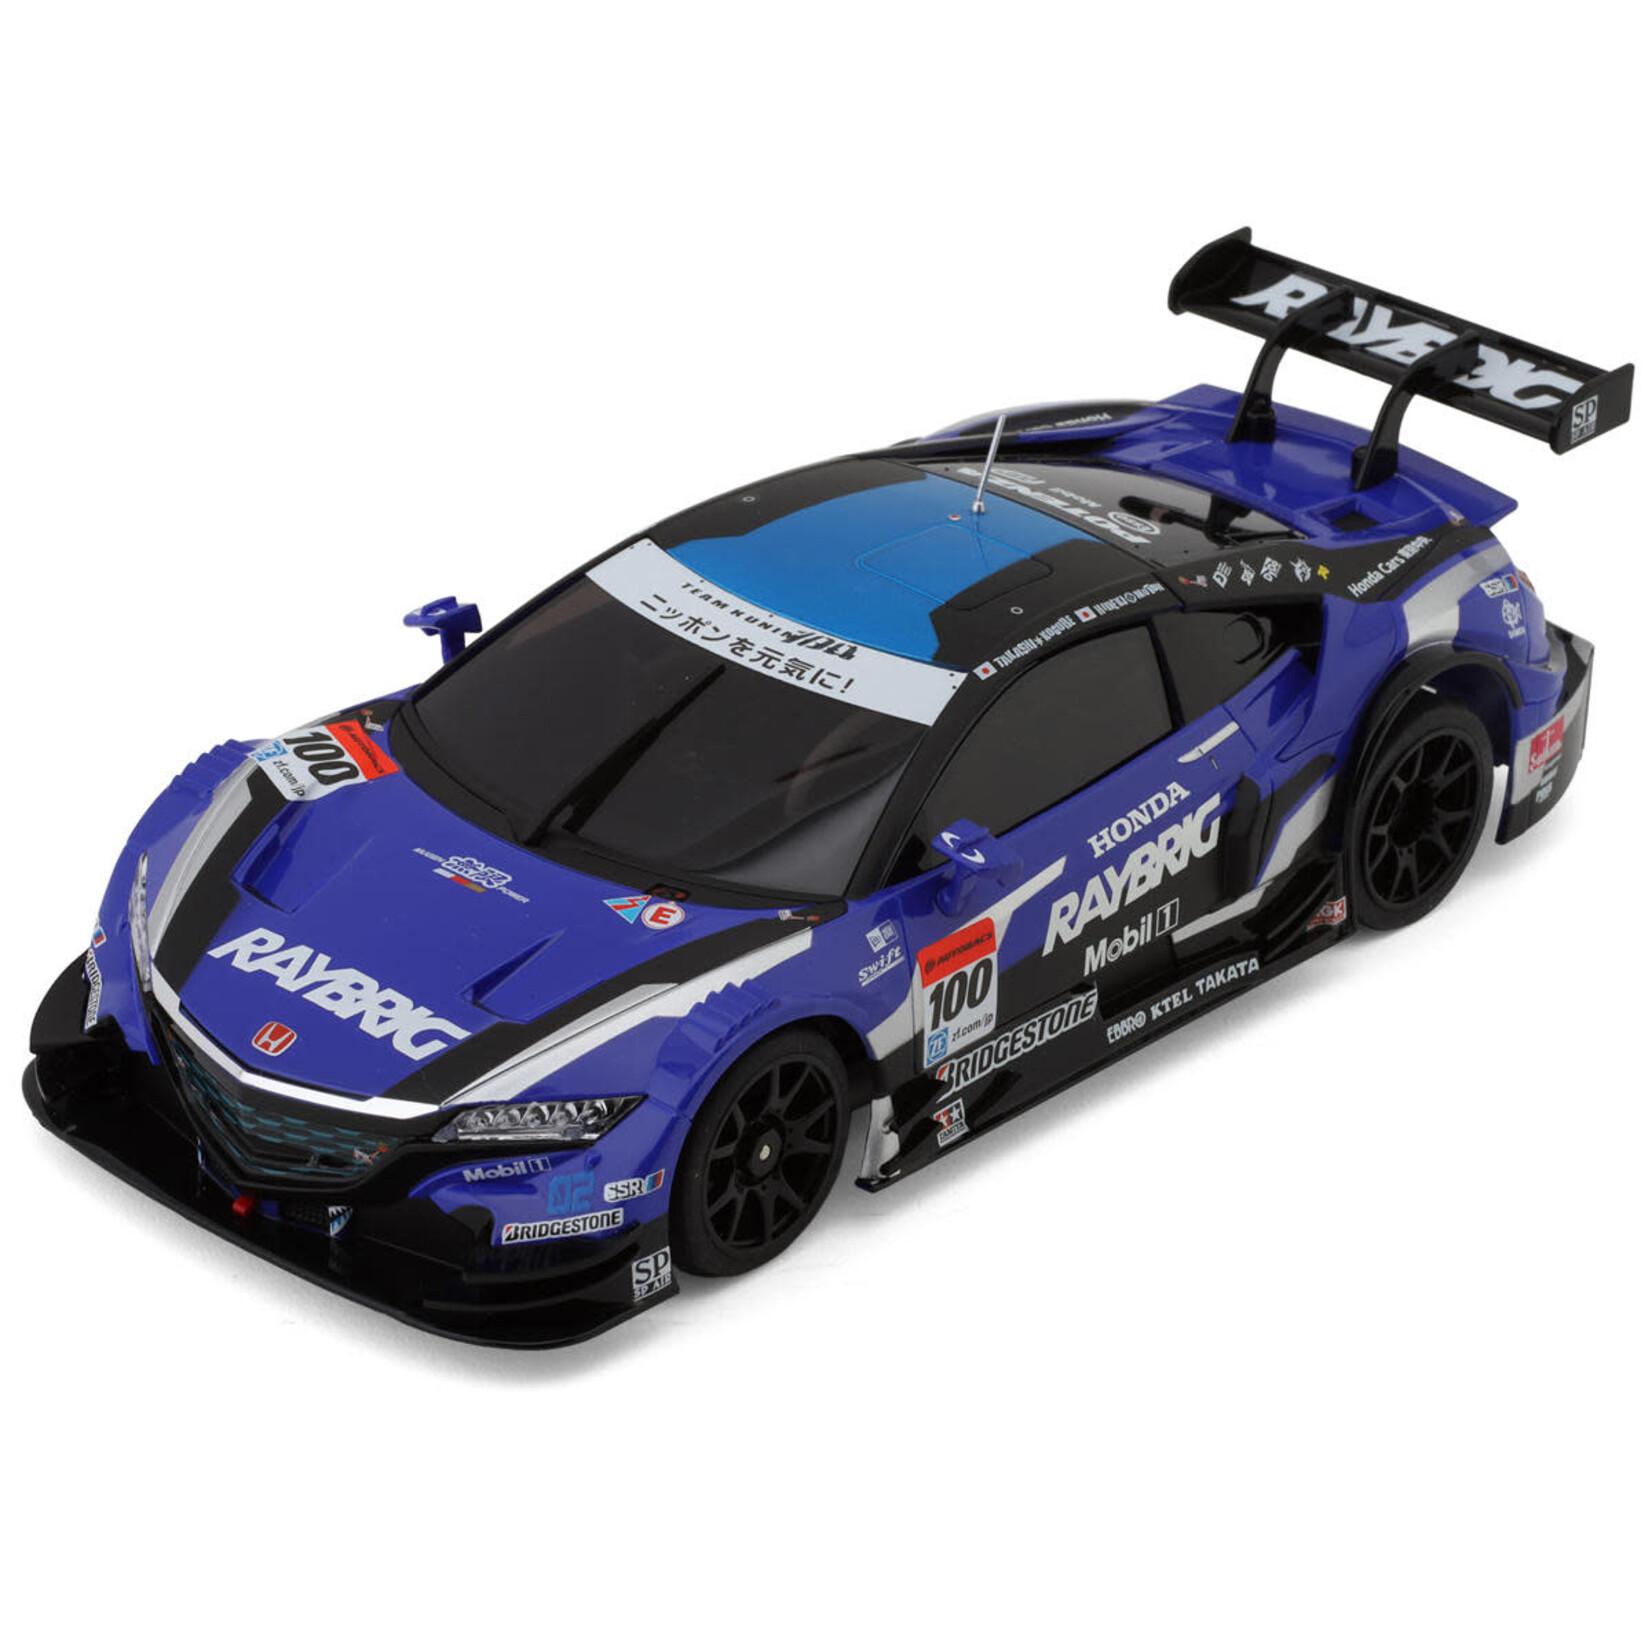 Kyosho Kyosho MR-03 Mini-Z Racer ReadySet w/Raybrig NSX Concept-GT 2014 Body (Blue) w/KT-531P 2.4GHz Radio #32350RG